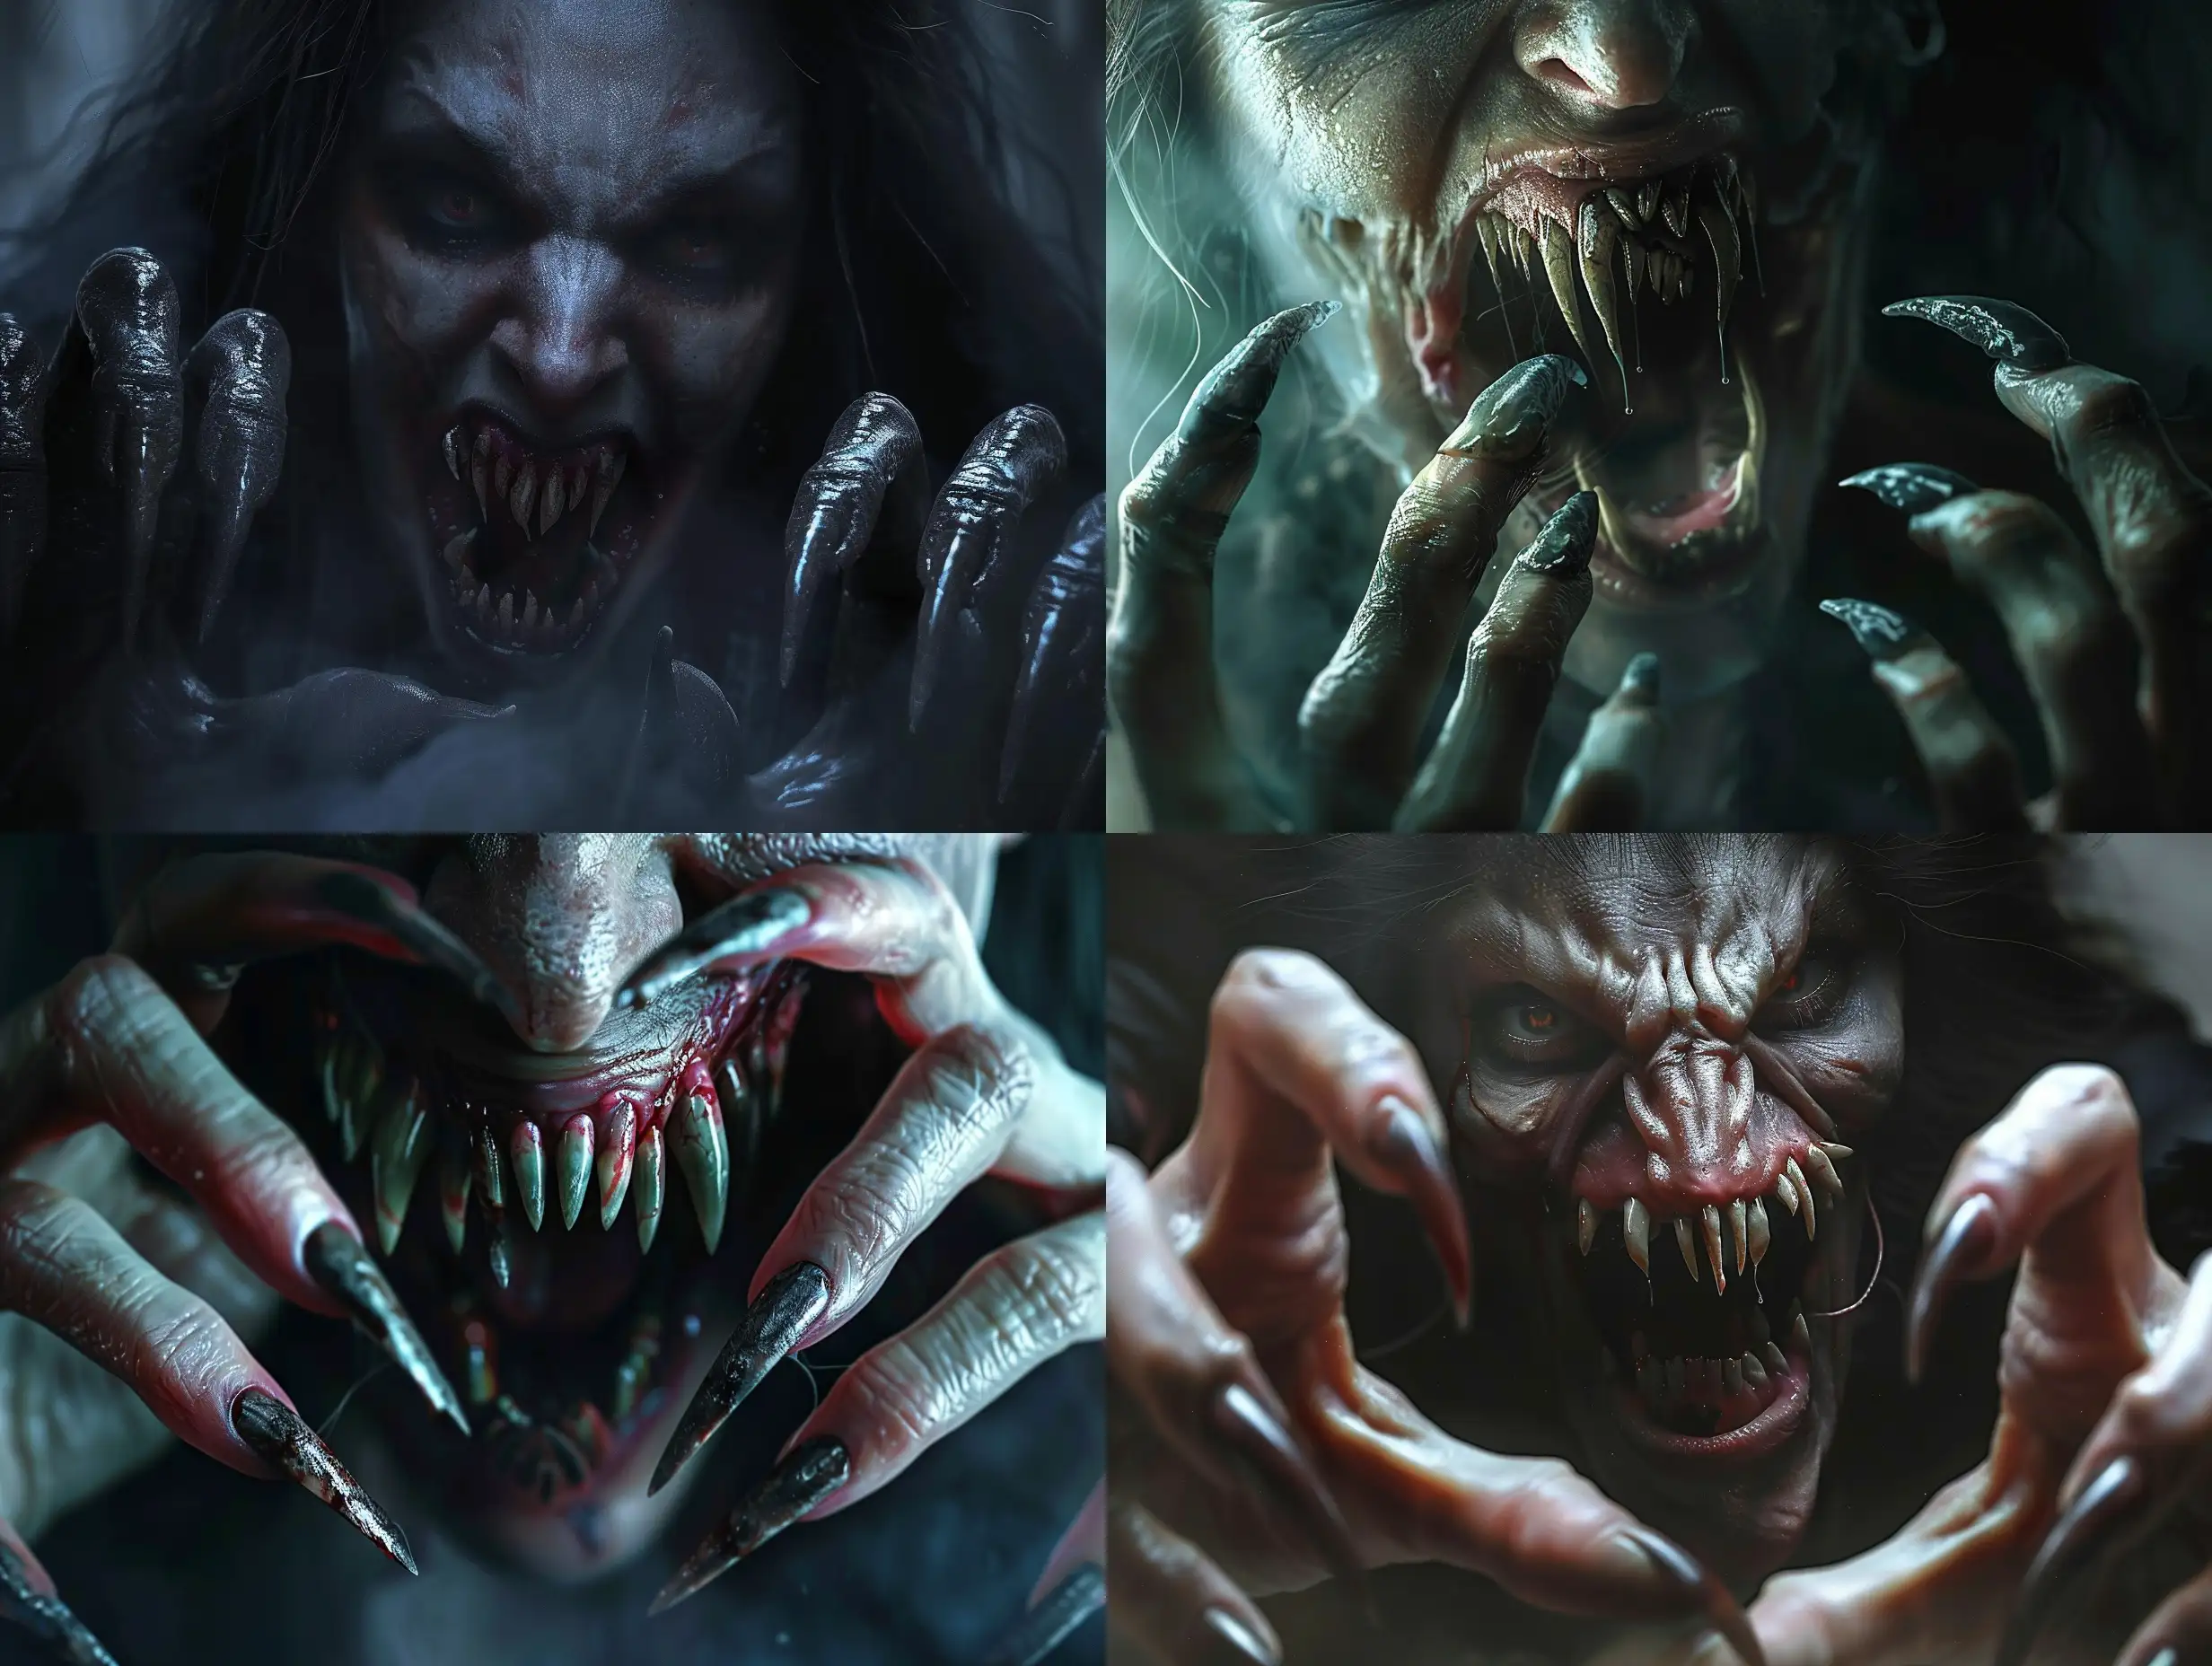 Terrifying-Monstrous-Female-Vampire-Attack-Scene-in-HyperRealistic-Photorealism